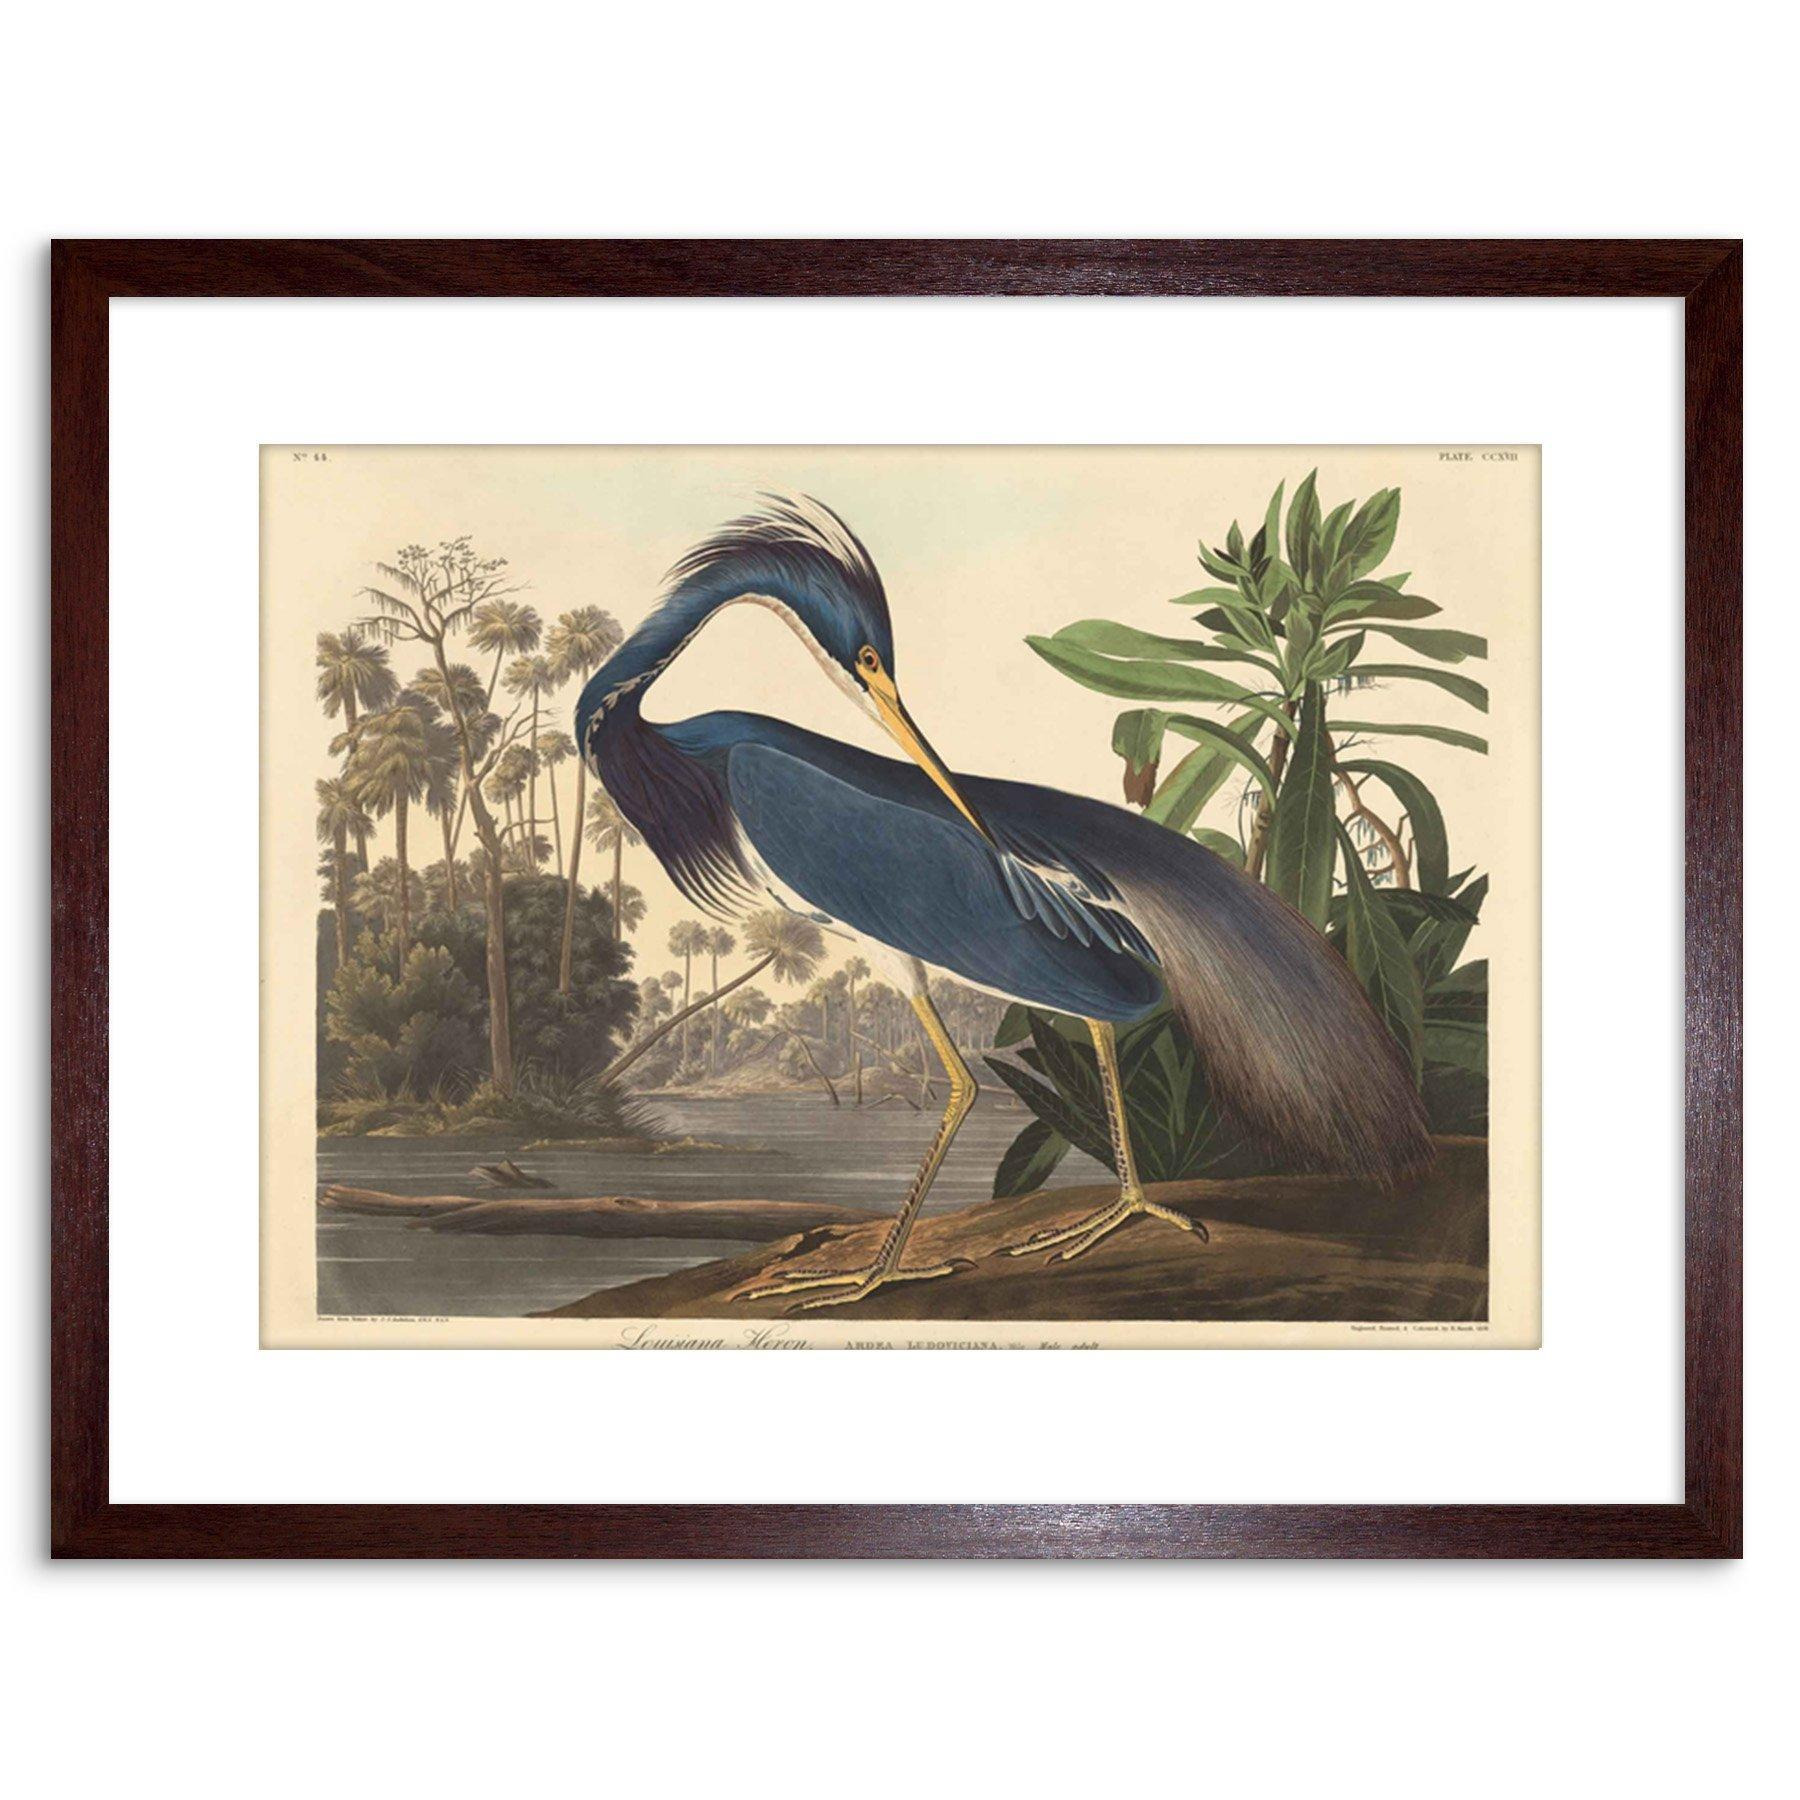 Painting Bird Audubon Louisiana Heron Artwork Framed Wall Art Print 9X7 Inch - image 1